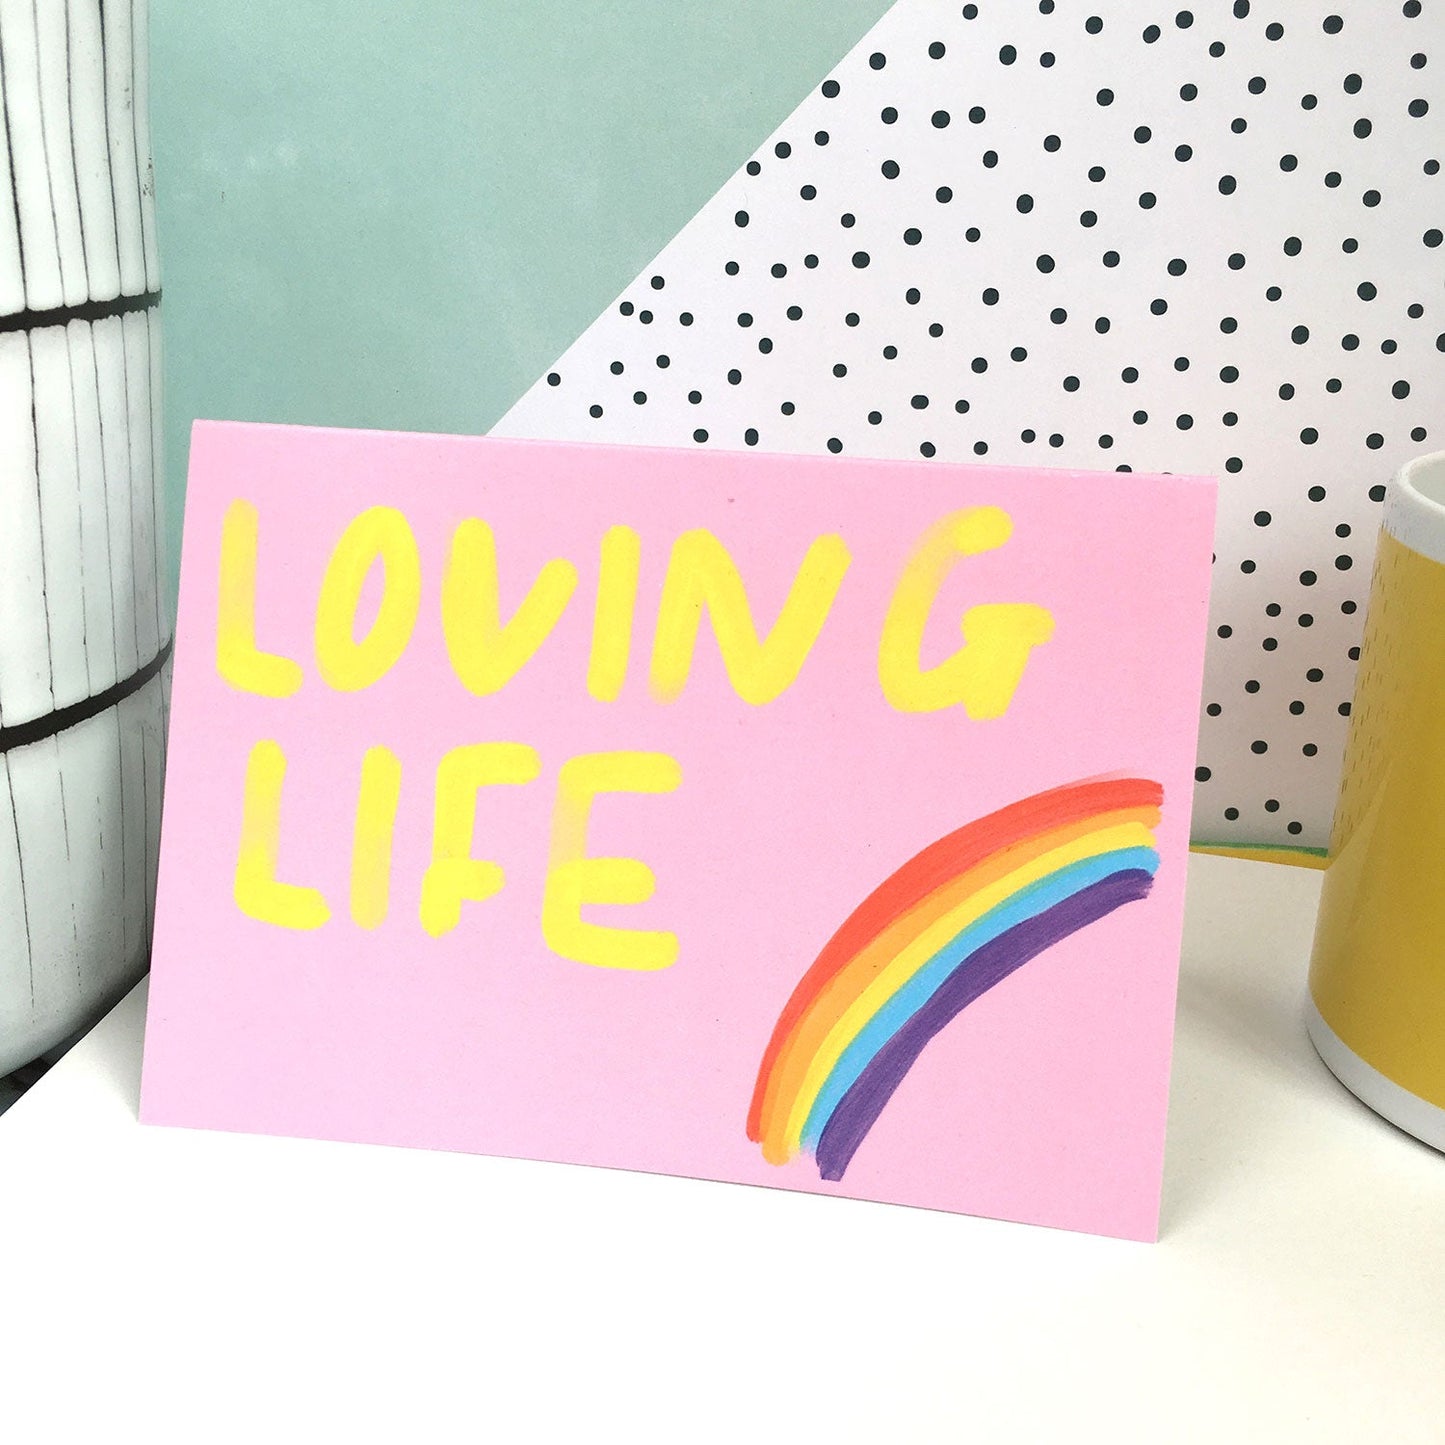 LOVING LIFE card